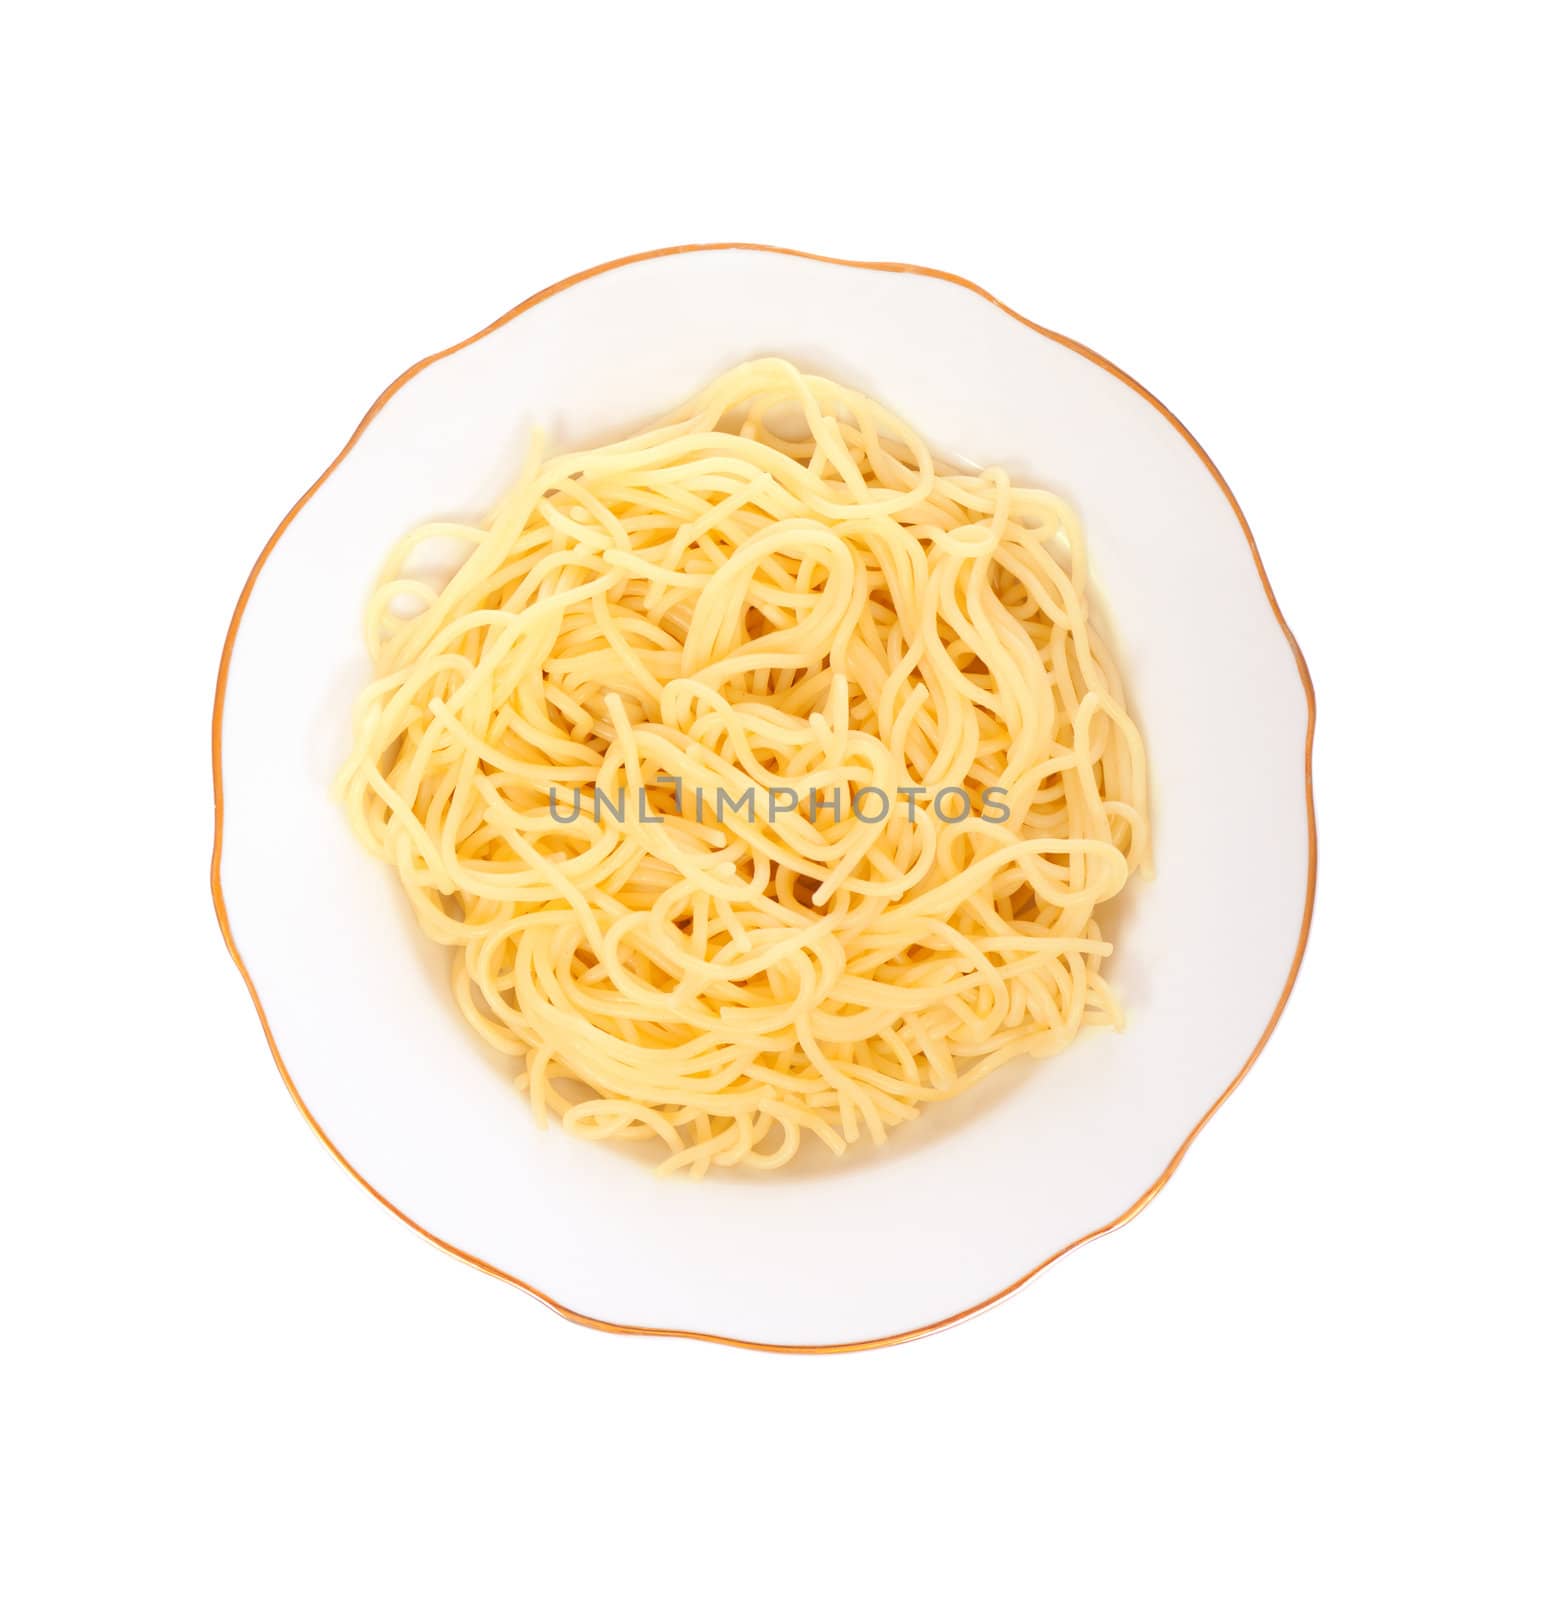 spaghetti on plate, photo on the white background